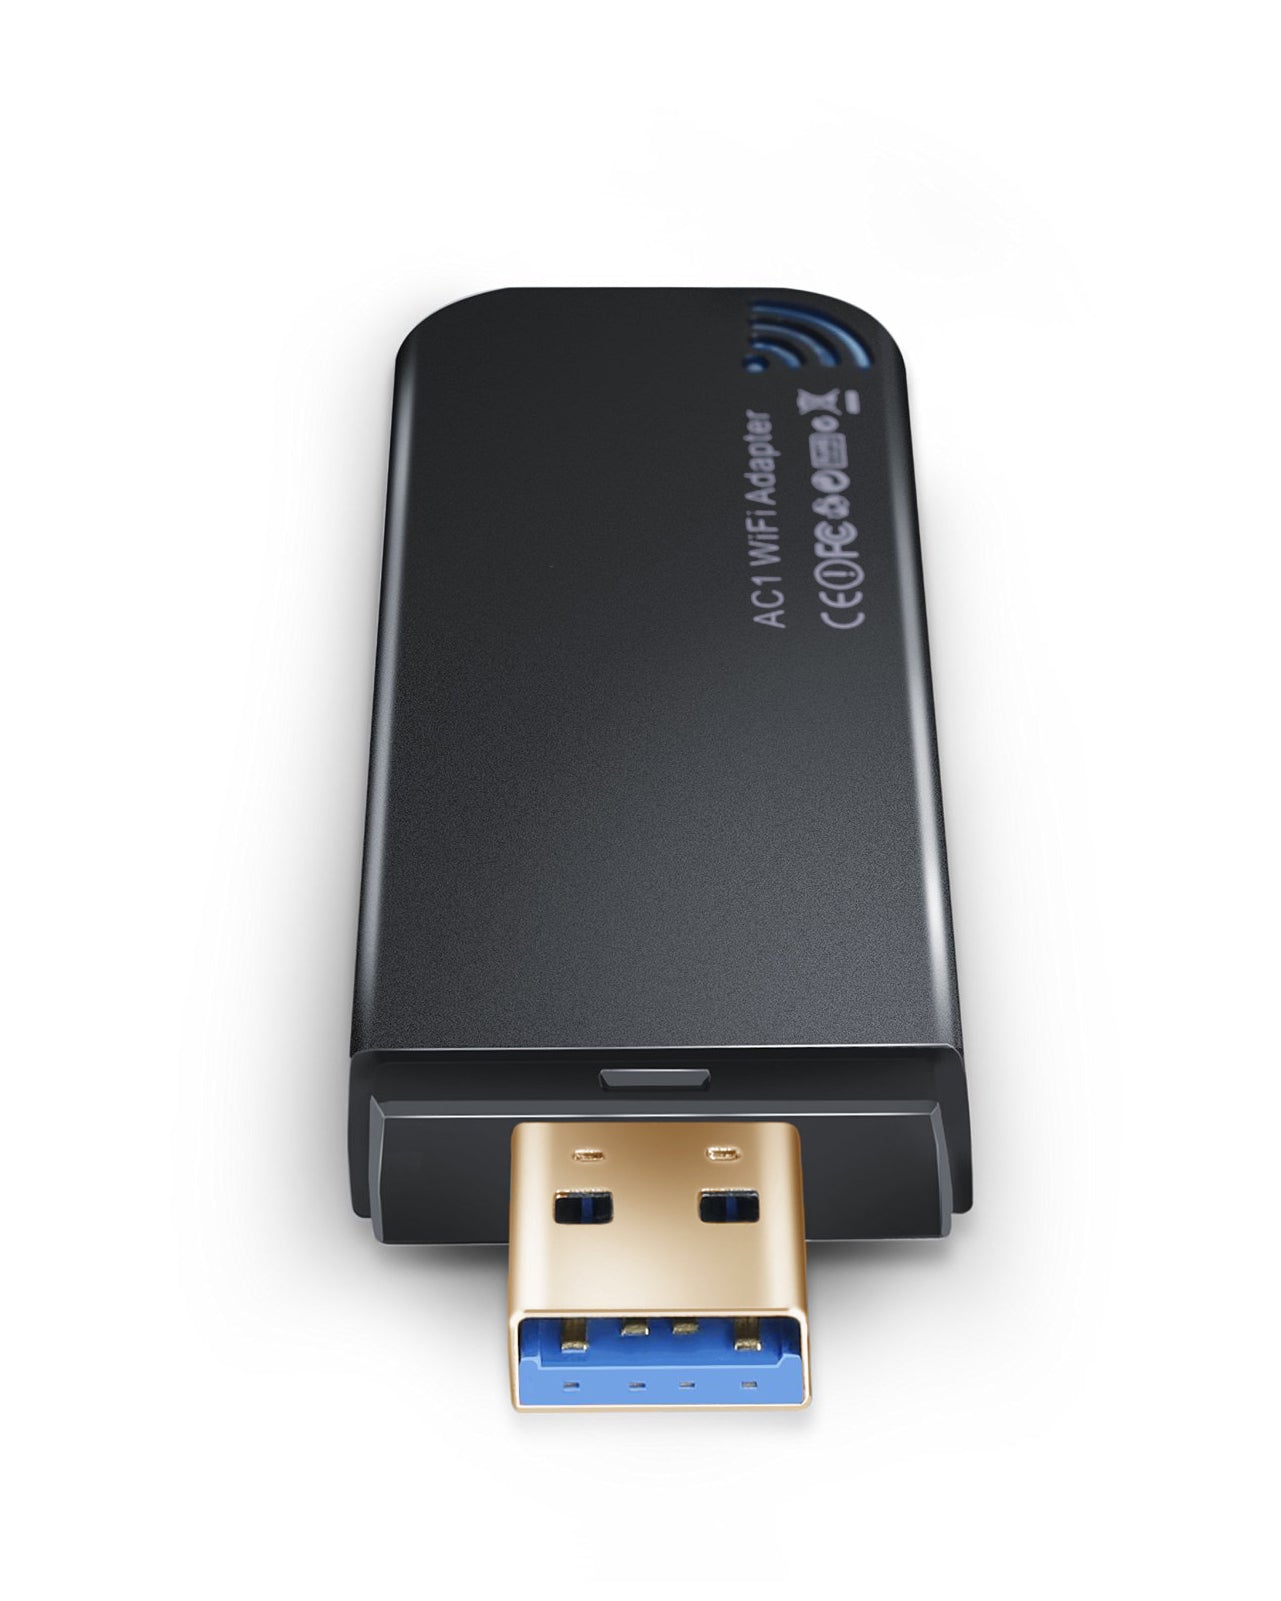 WE - Clé USB Wifi Puissant WECLW1200USB 1200 Mbps 5GHz